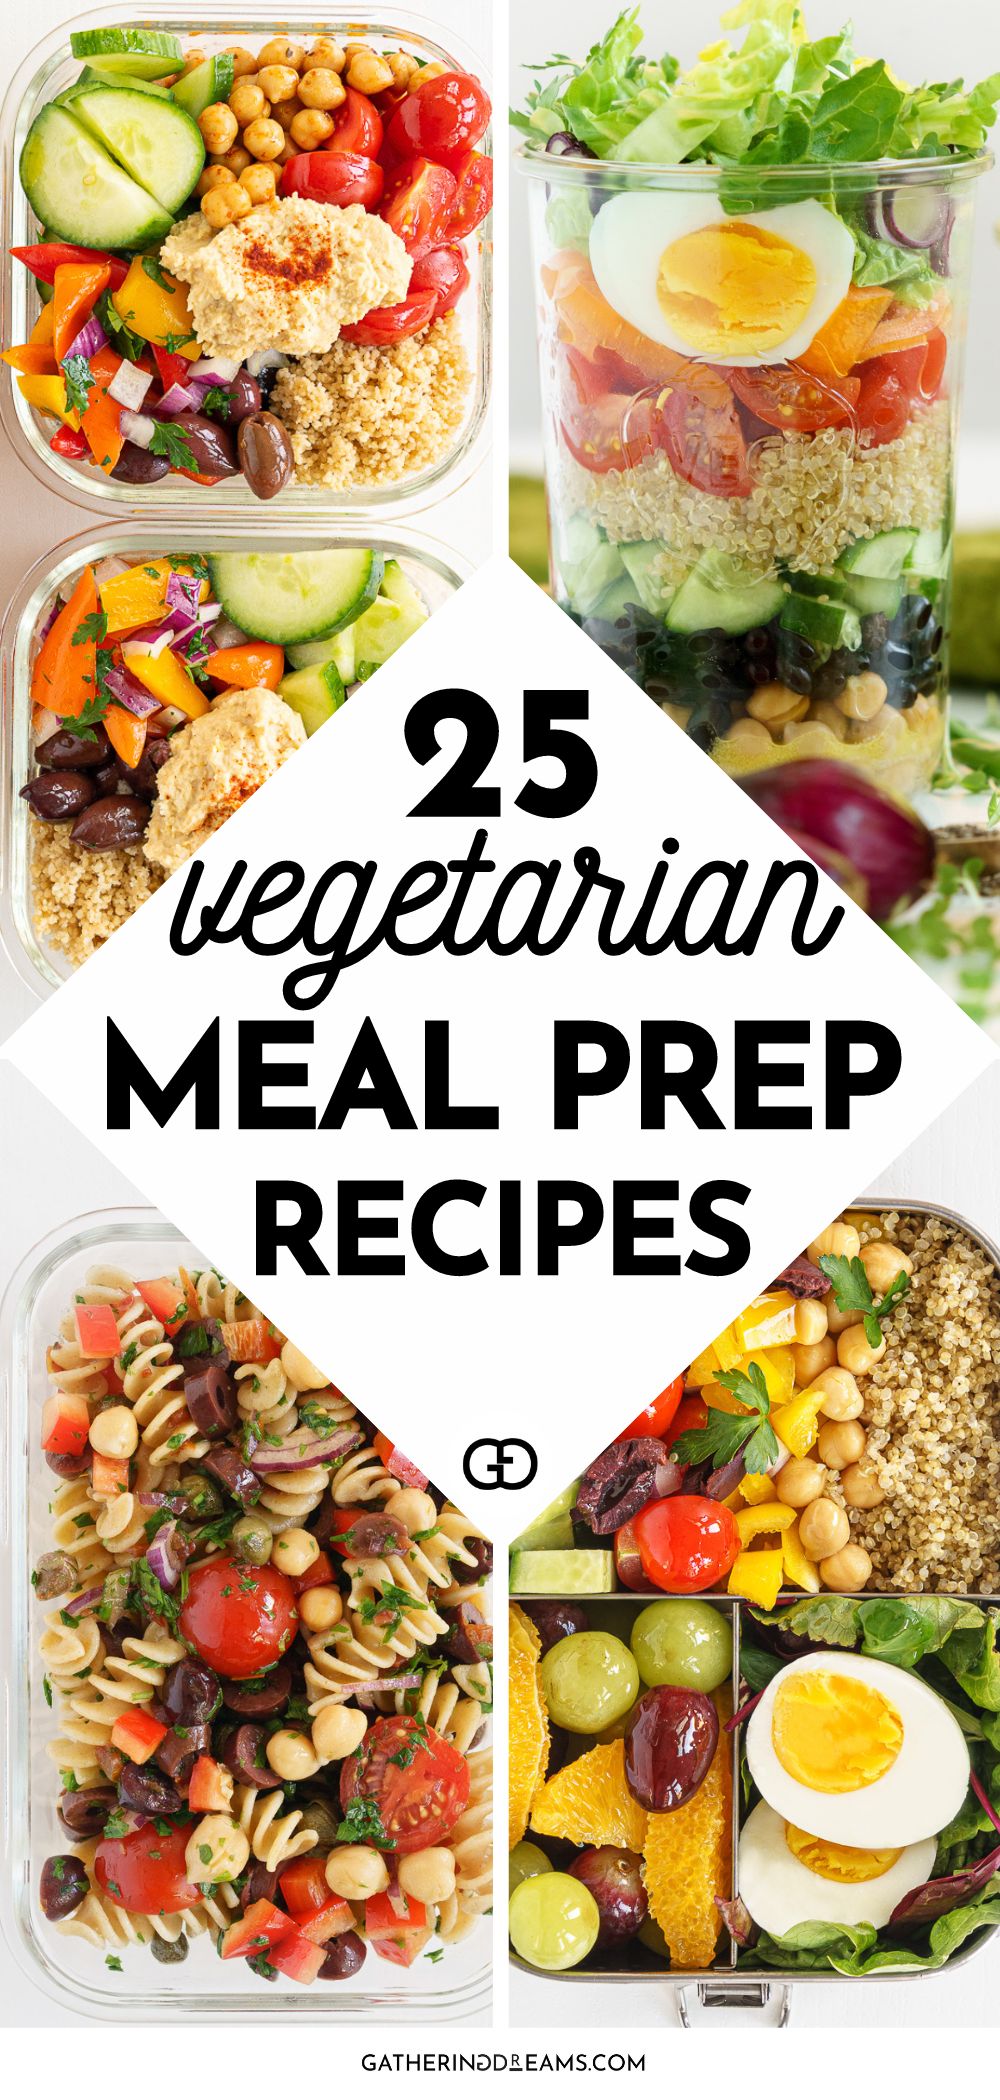 25 Healthy Vegetarian Meal Prep Ideas - Gathering Dreams